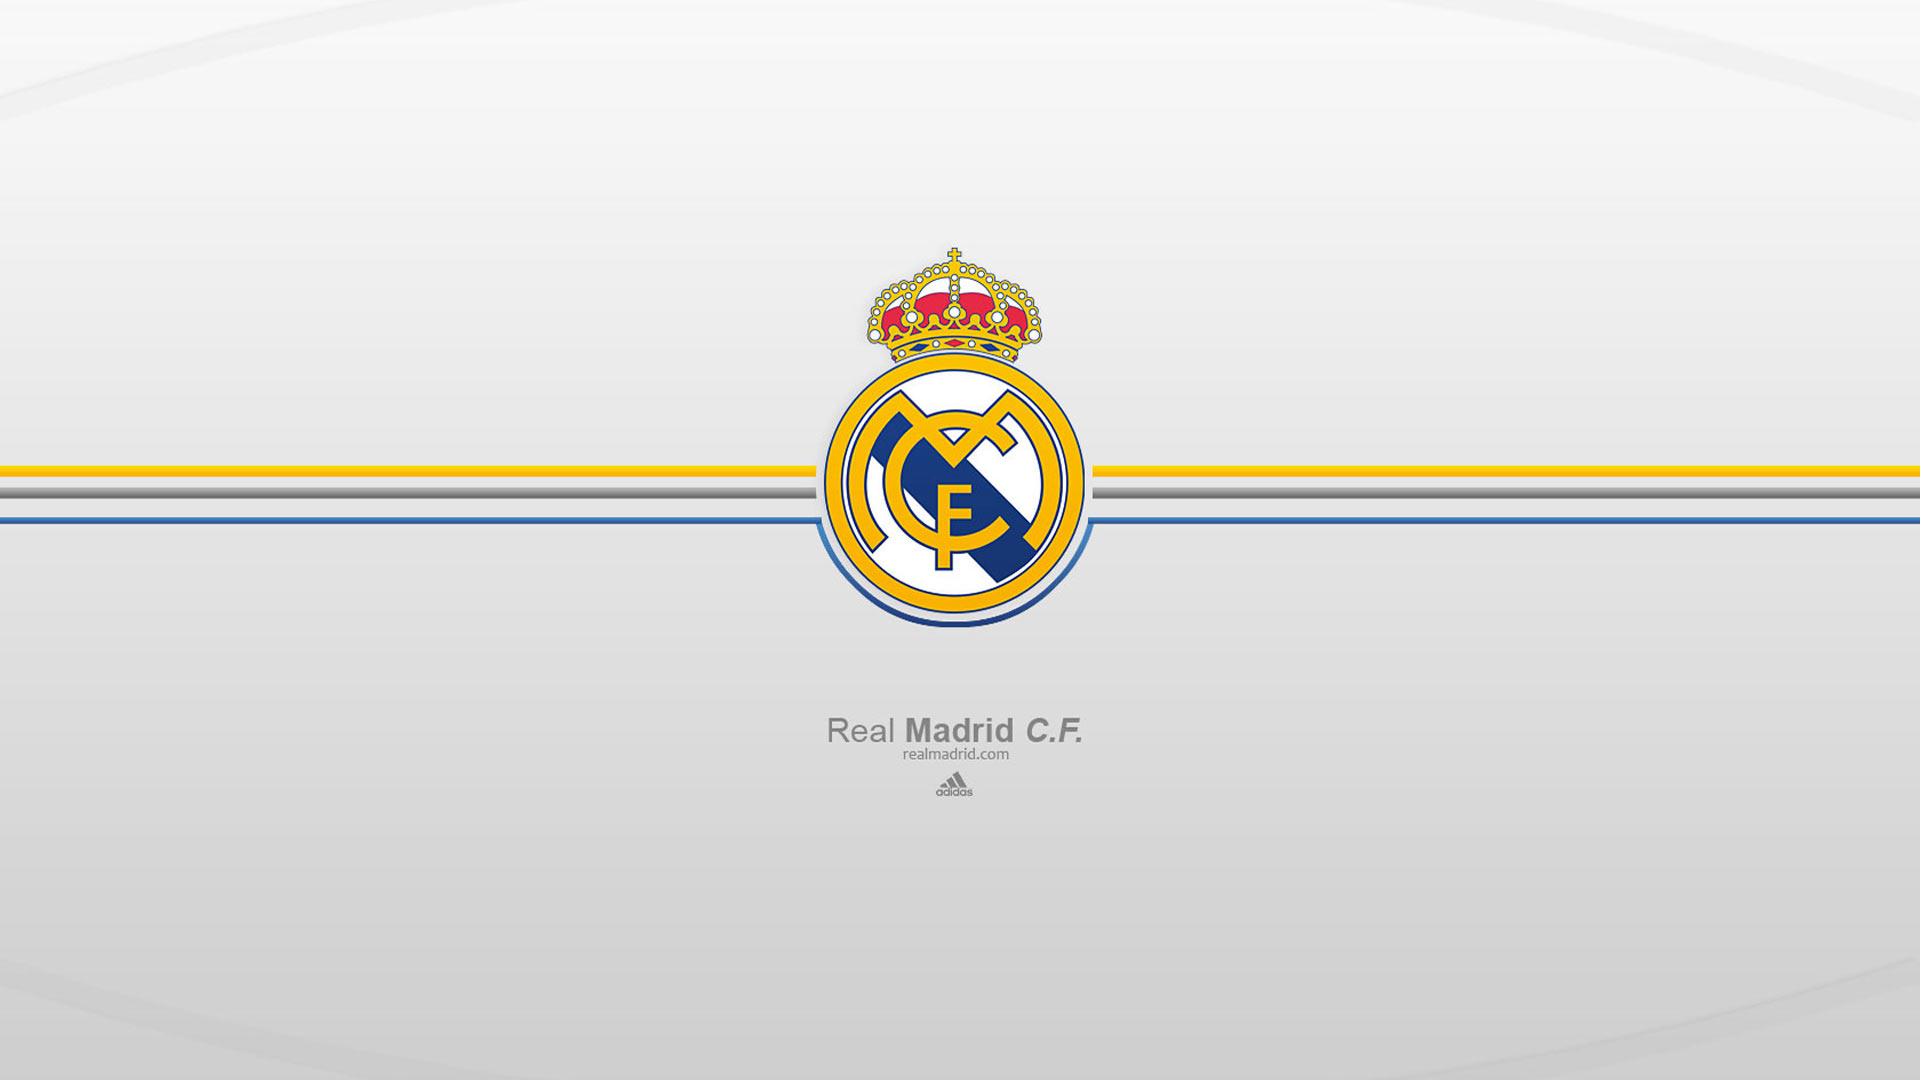 Real Madrid Cf High Definition Widescreen Desktop Wallpaper